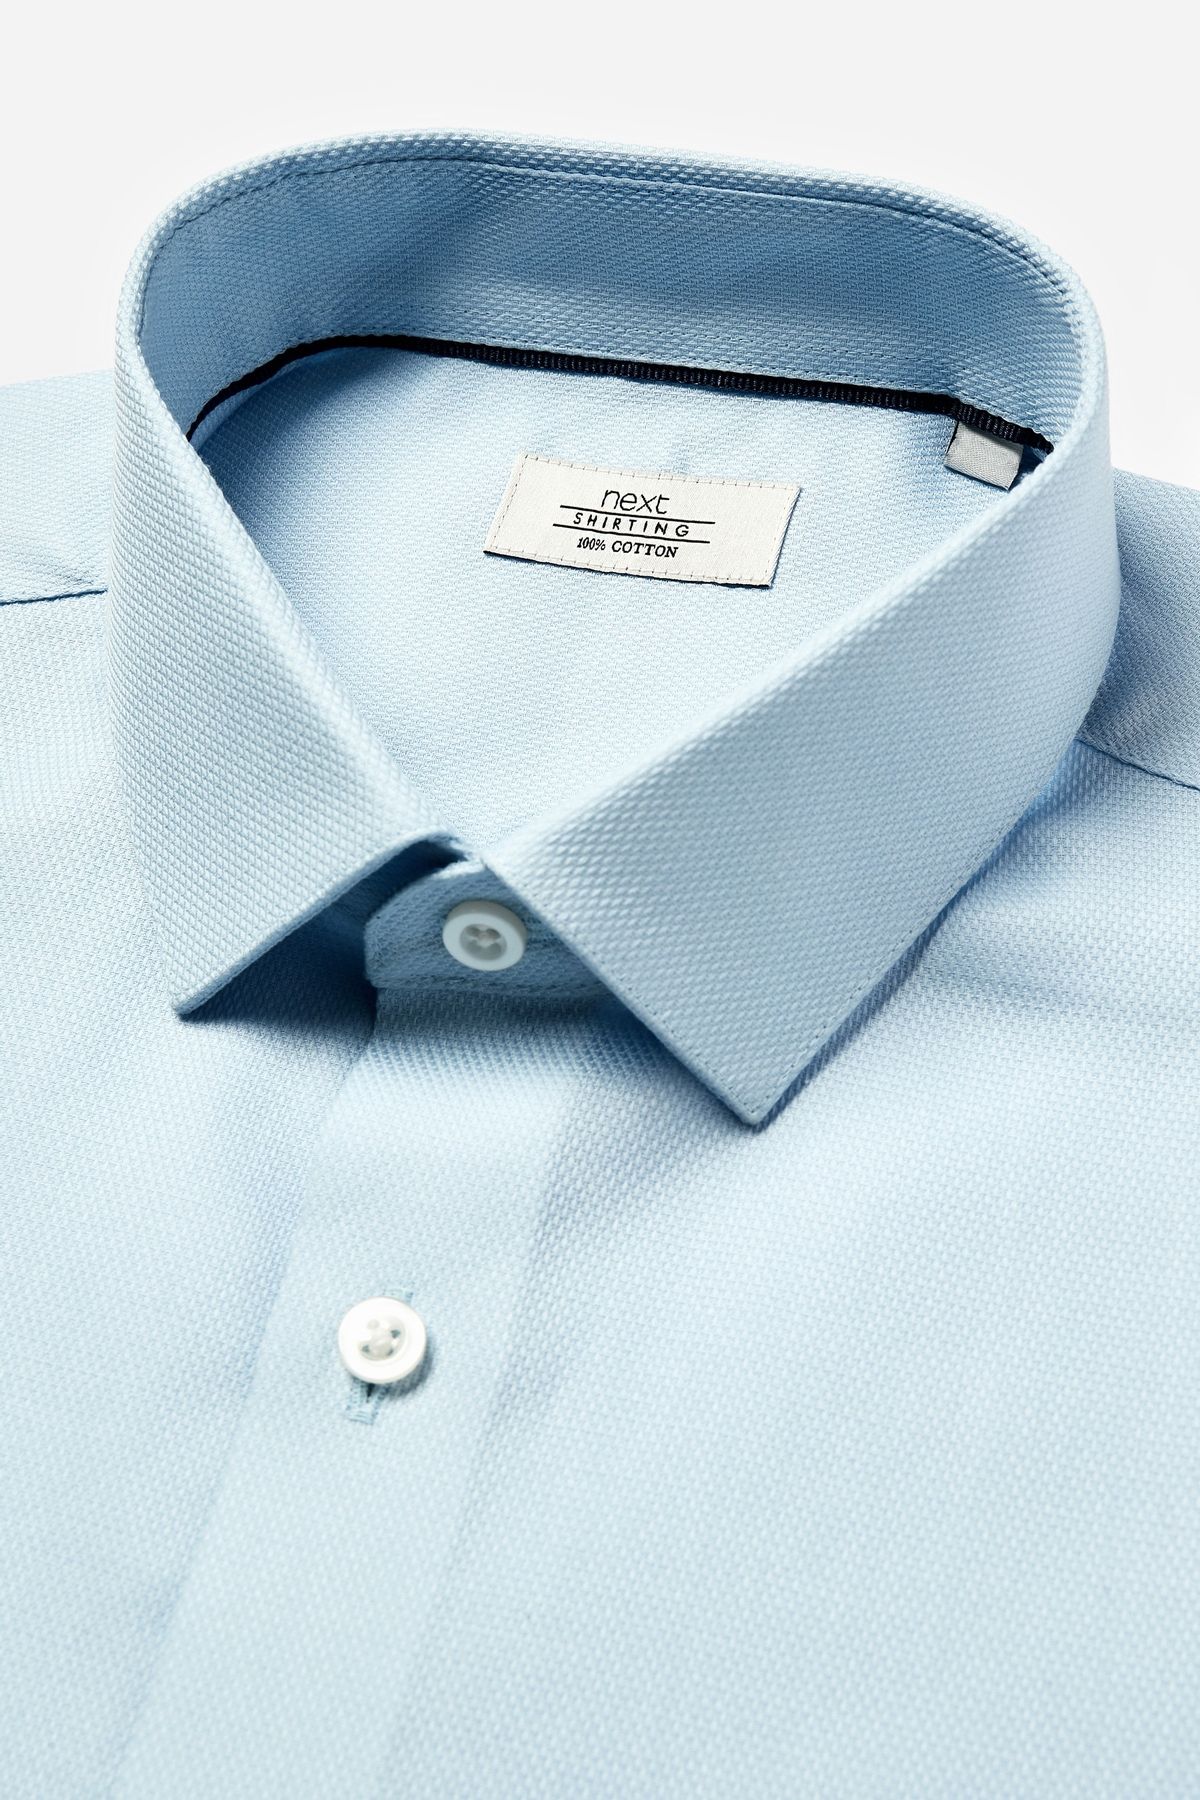 NEXT Cotton Textured Shirt Blue Men Shirts|akgalleria.com